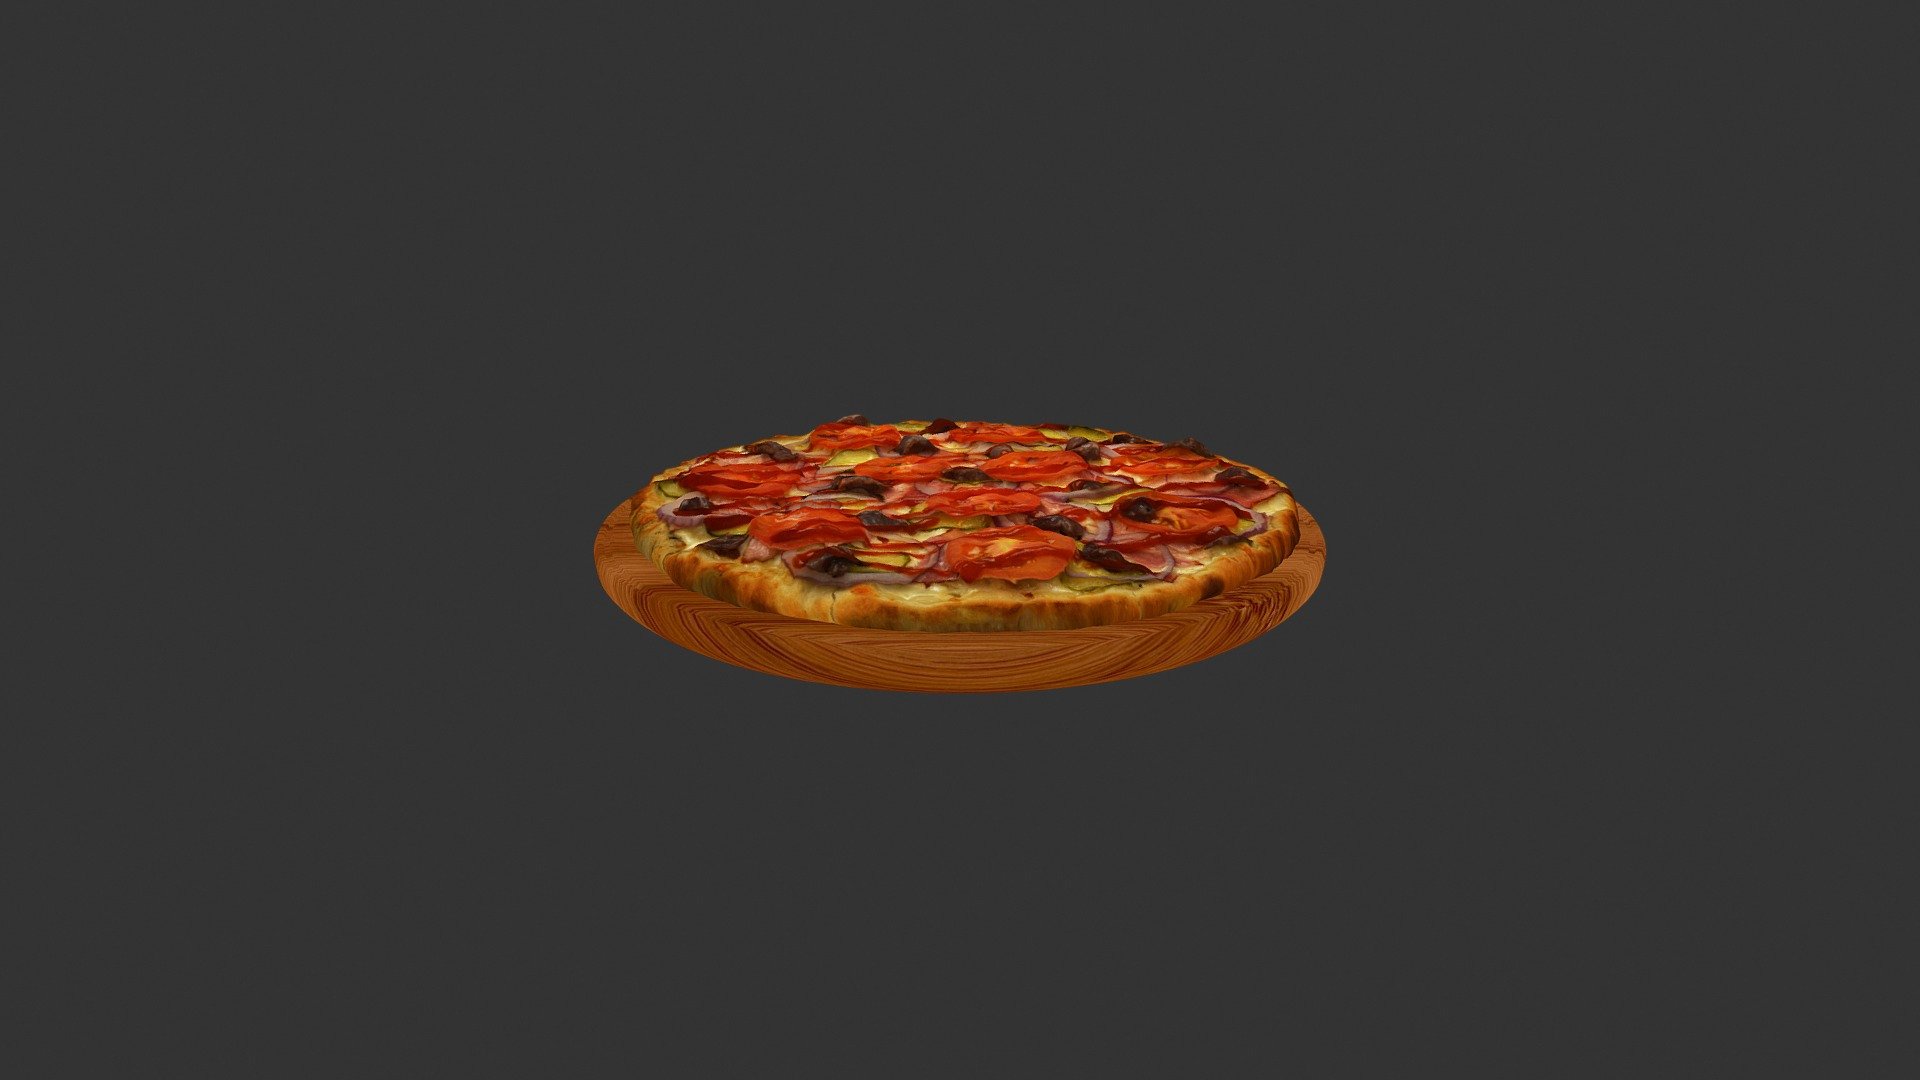 Піца Корно Россо (Tomato_onion_cucumber_pizza) - 3D model by alex.alexandrov.a 3d model